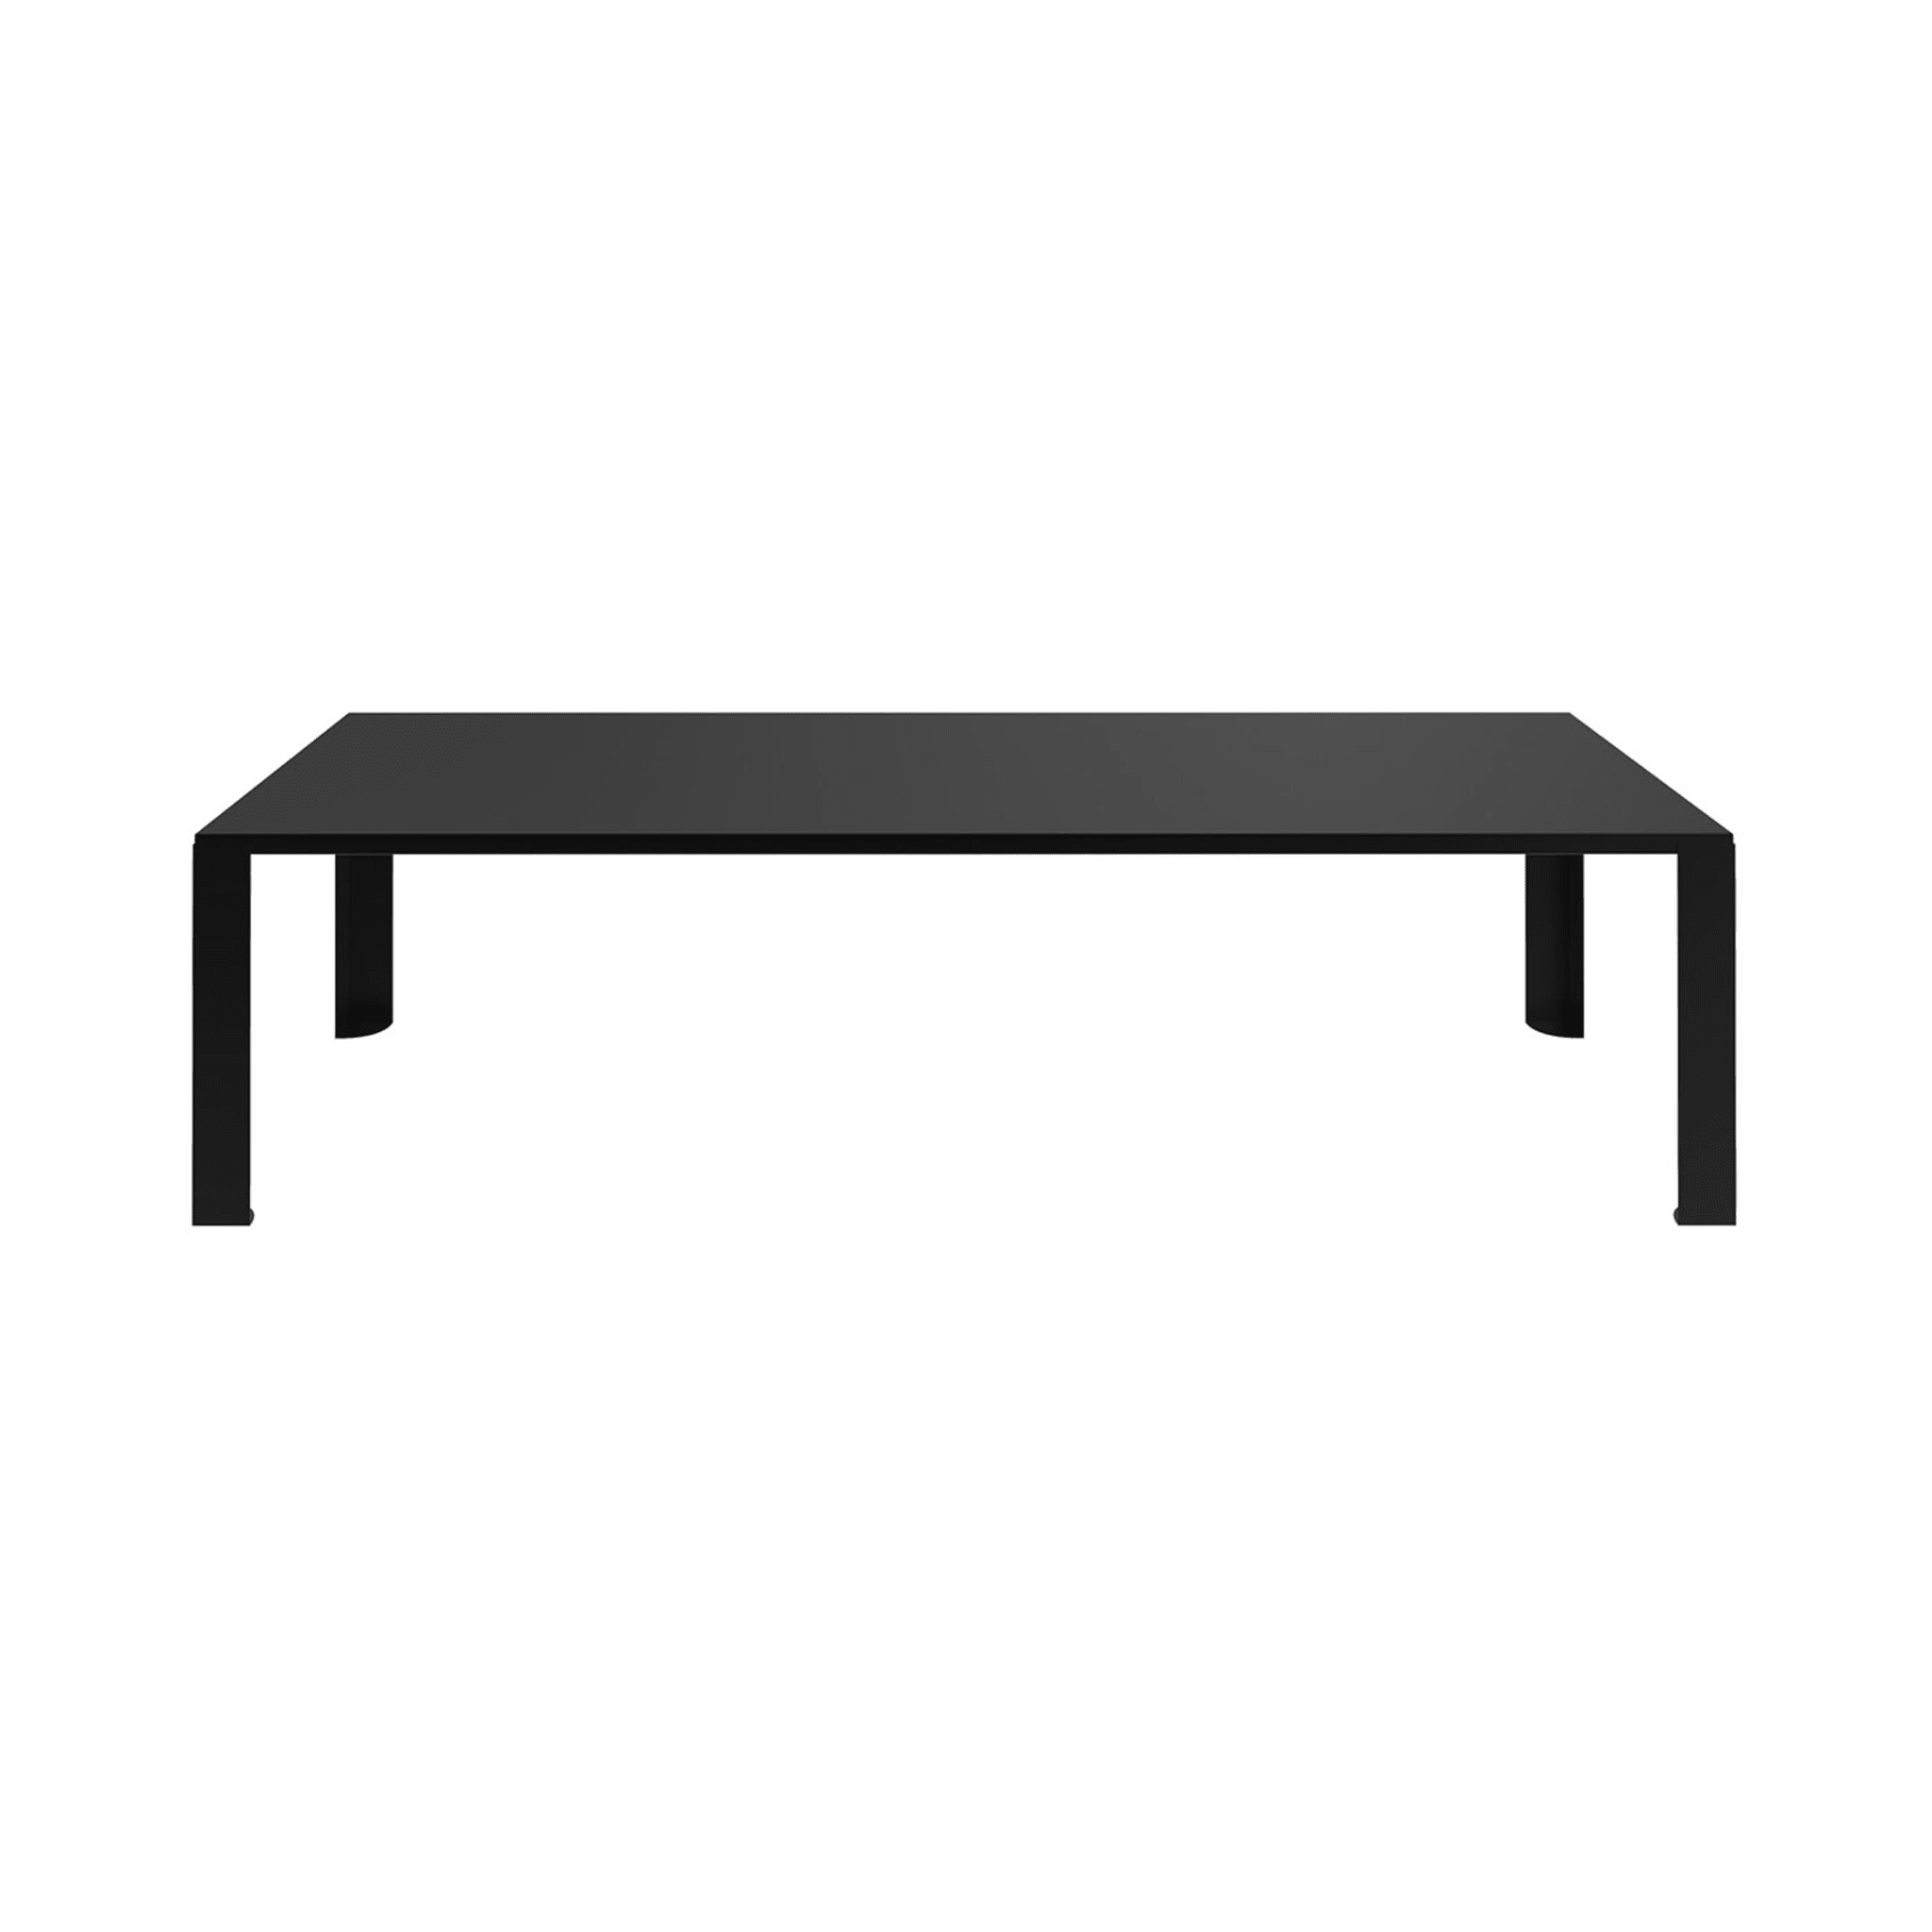 Big Irony Rectangular Black Table by Maurizio Peregalli  - Main view